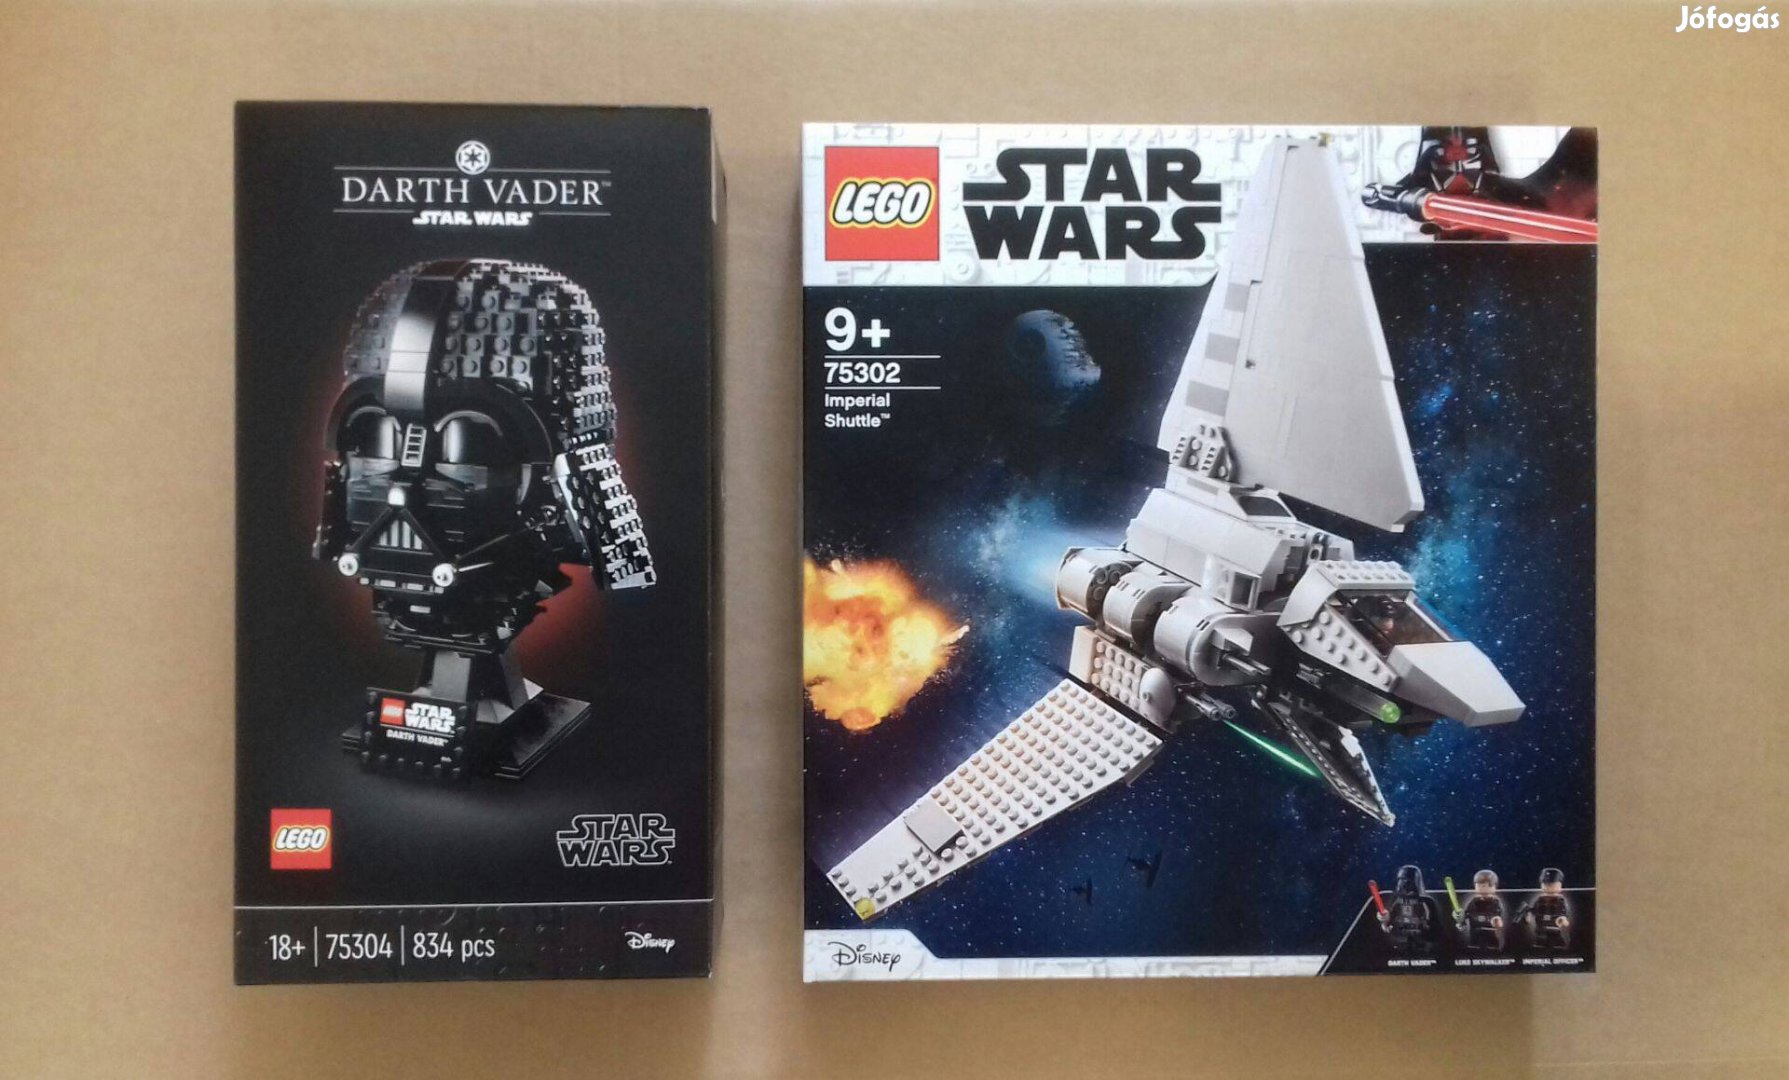 Darth Vader -es új Star Wars LEGO -k: 75304 + 75302 Űrsikló Fox.azárba